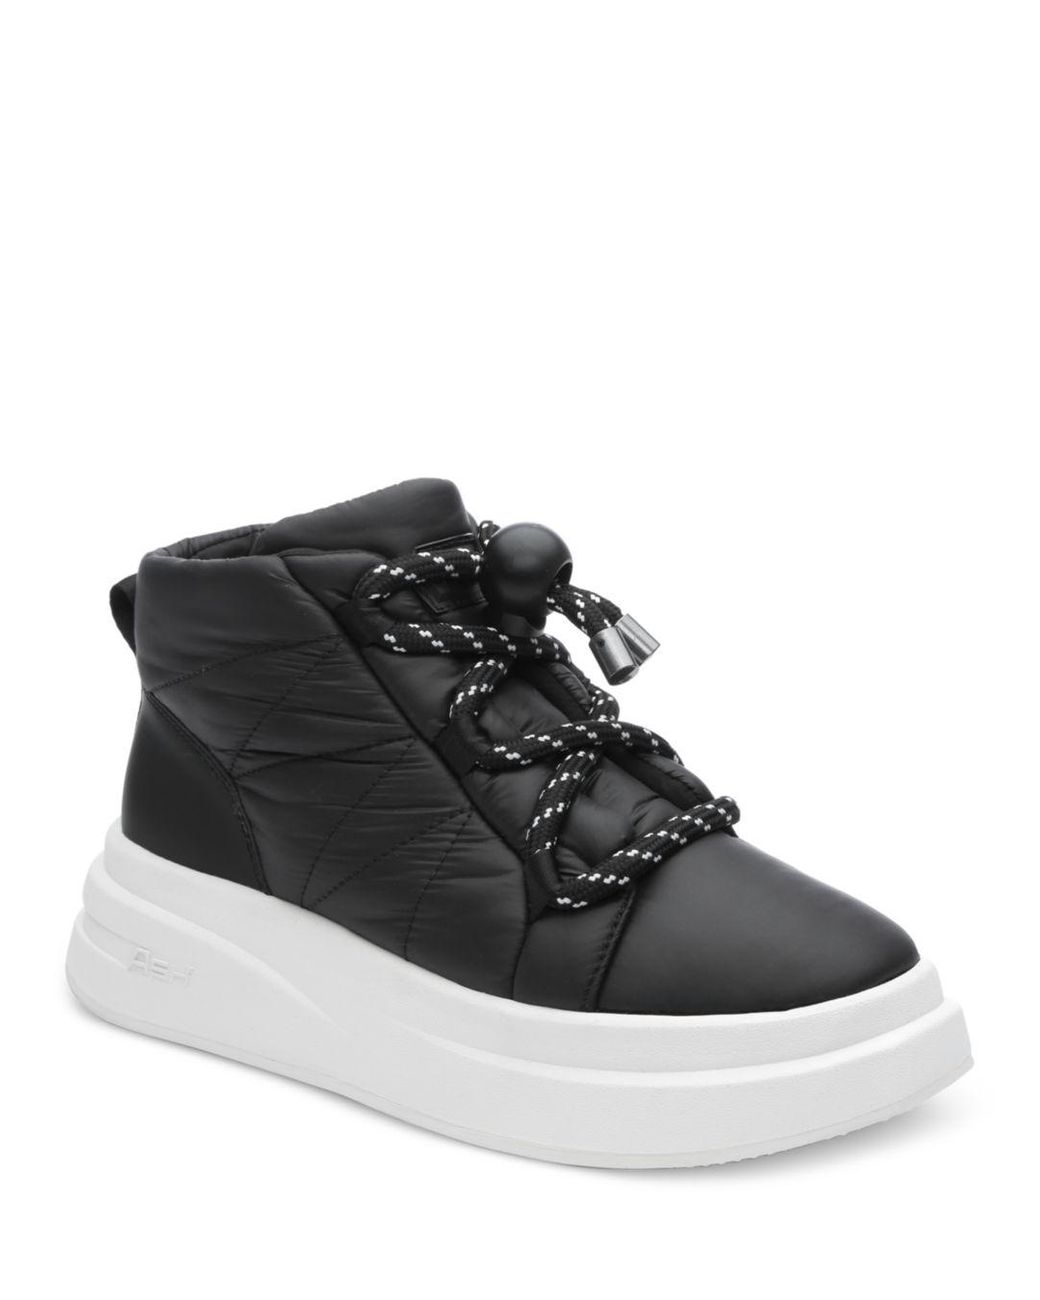 Ash Igloo Puffy High Top Platform Sneakers in Black | Lyst